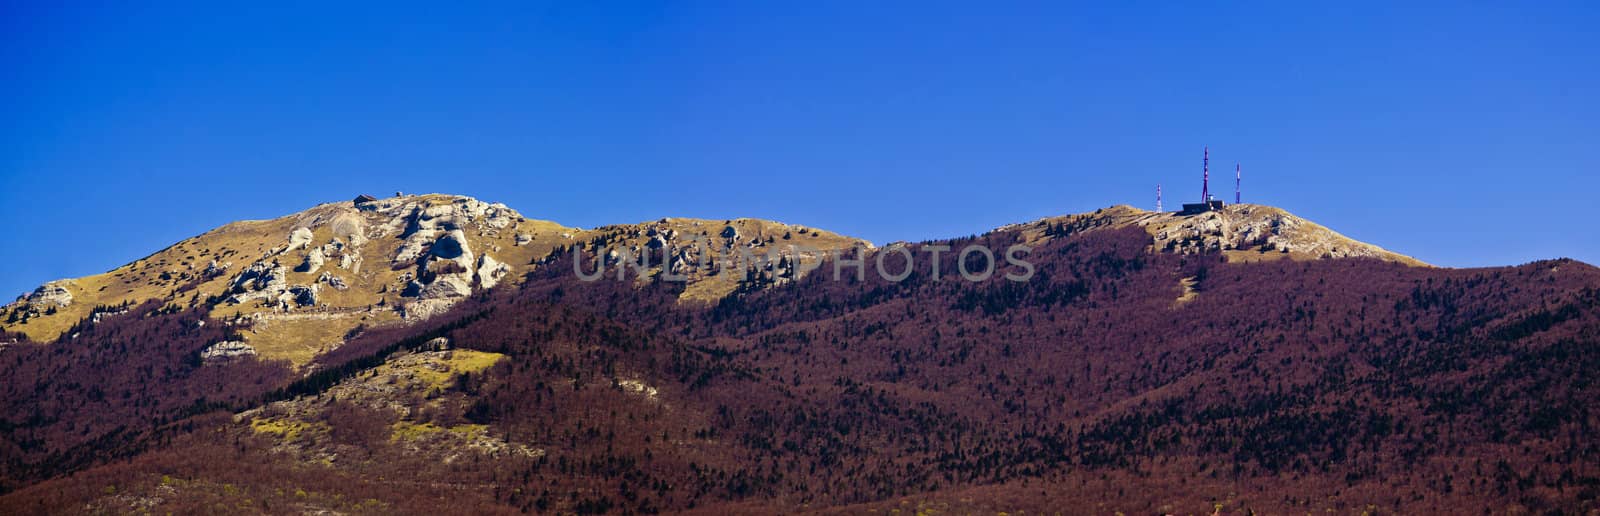 Licka Plesevica mountain peak panorama by xbrchx